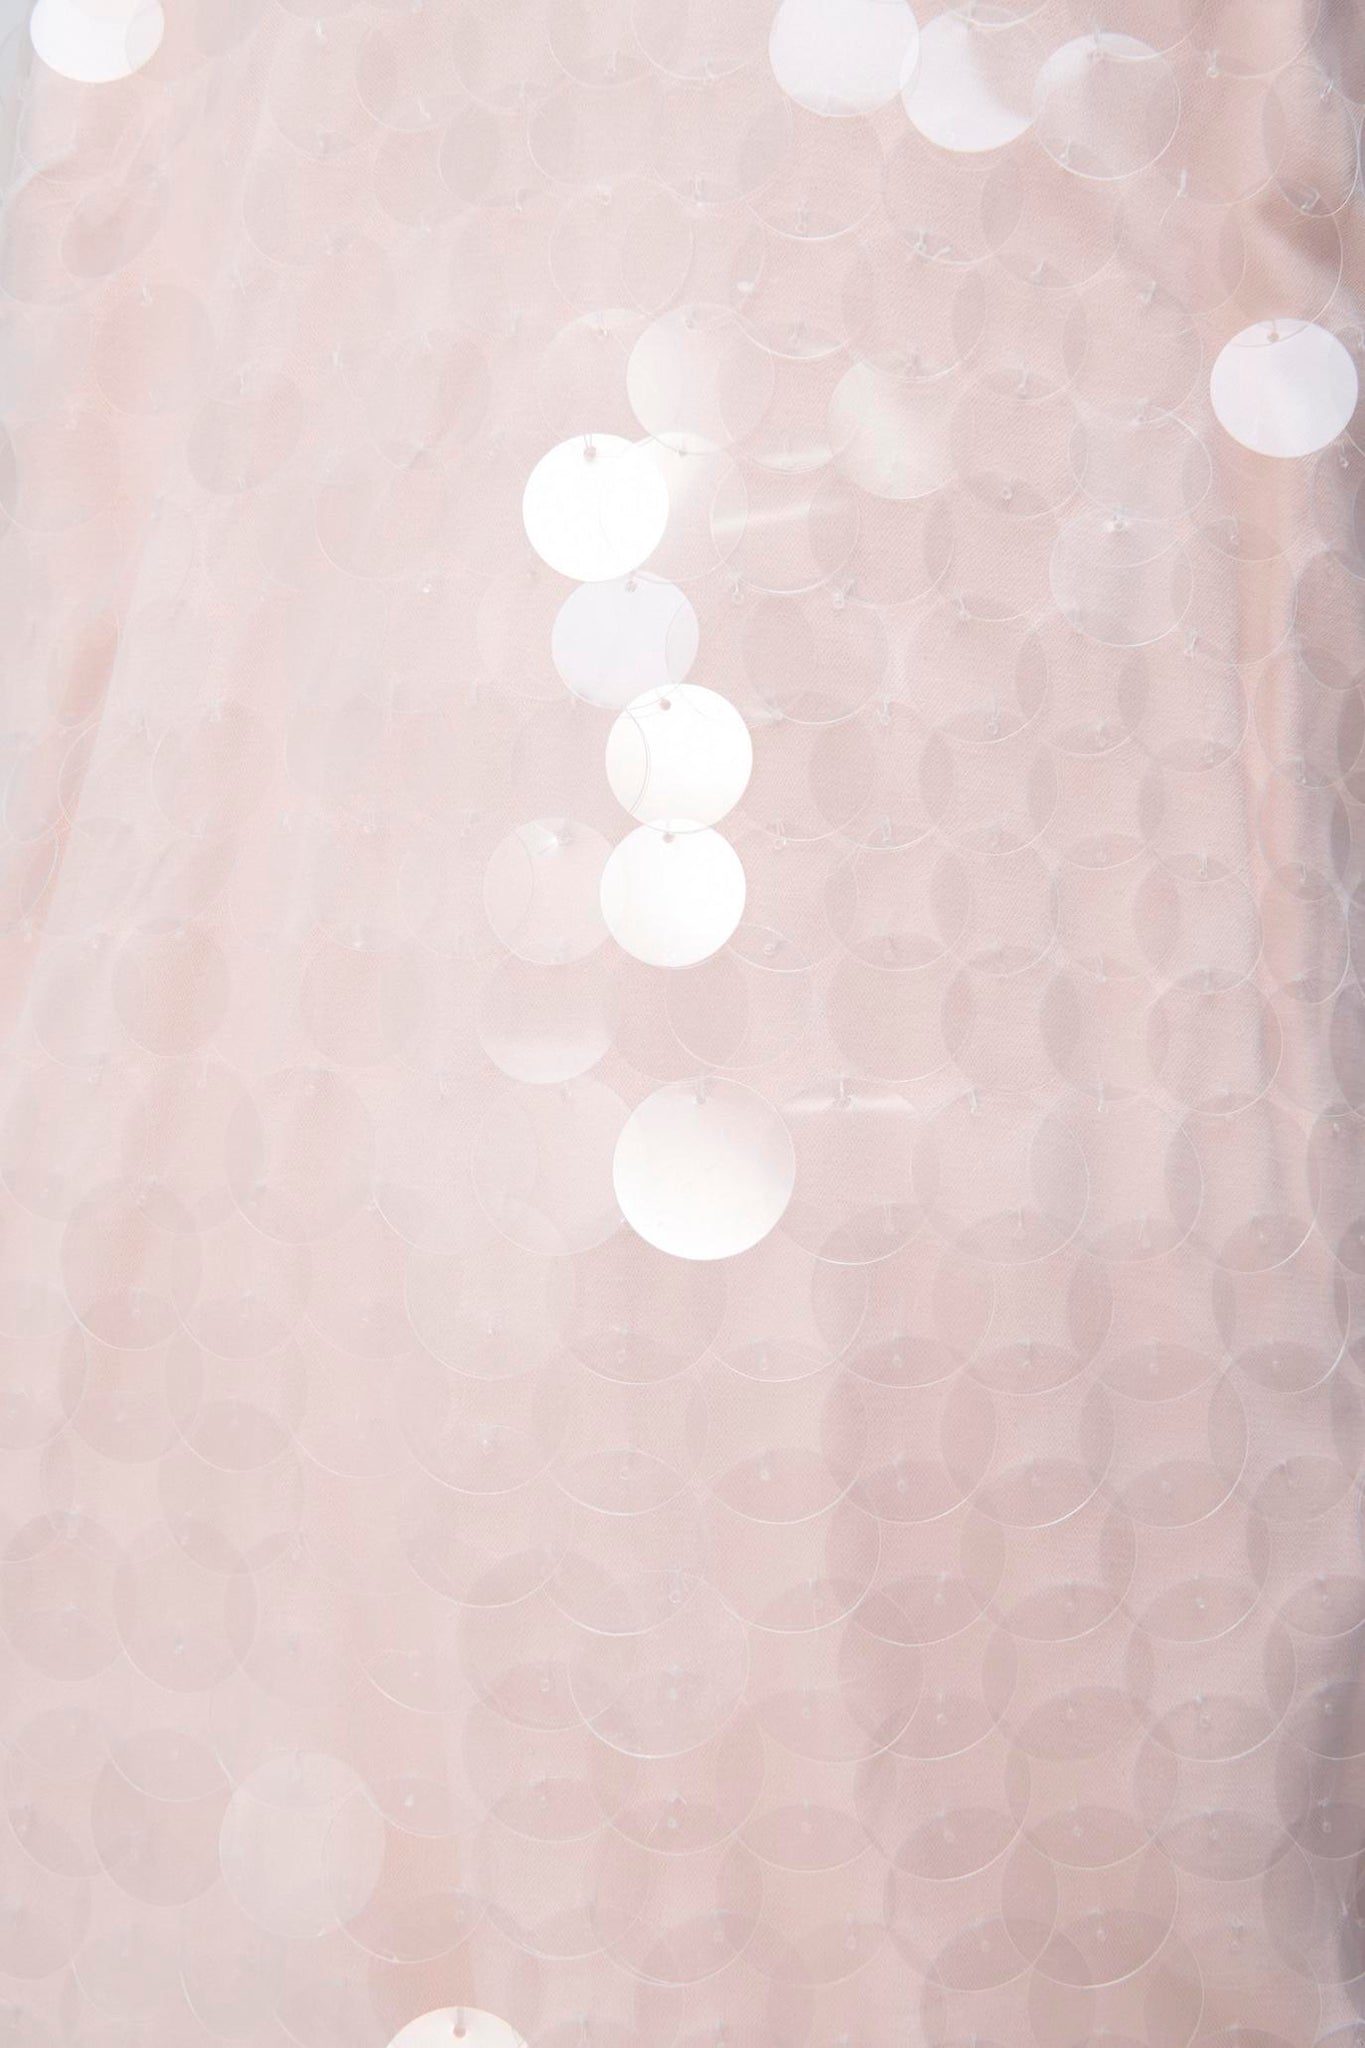 Madysen Transparent Sequin Midi Dress - SIMKHAI 